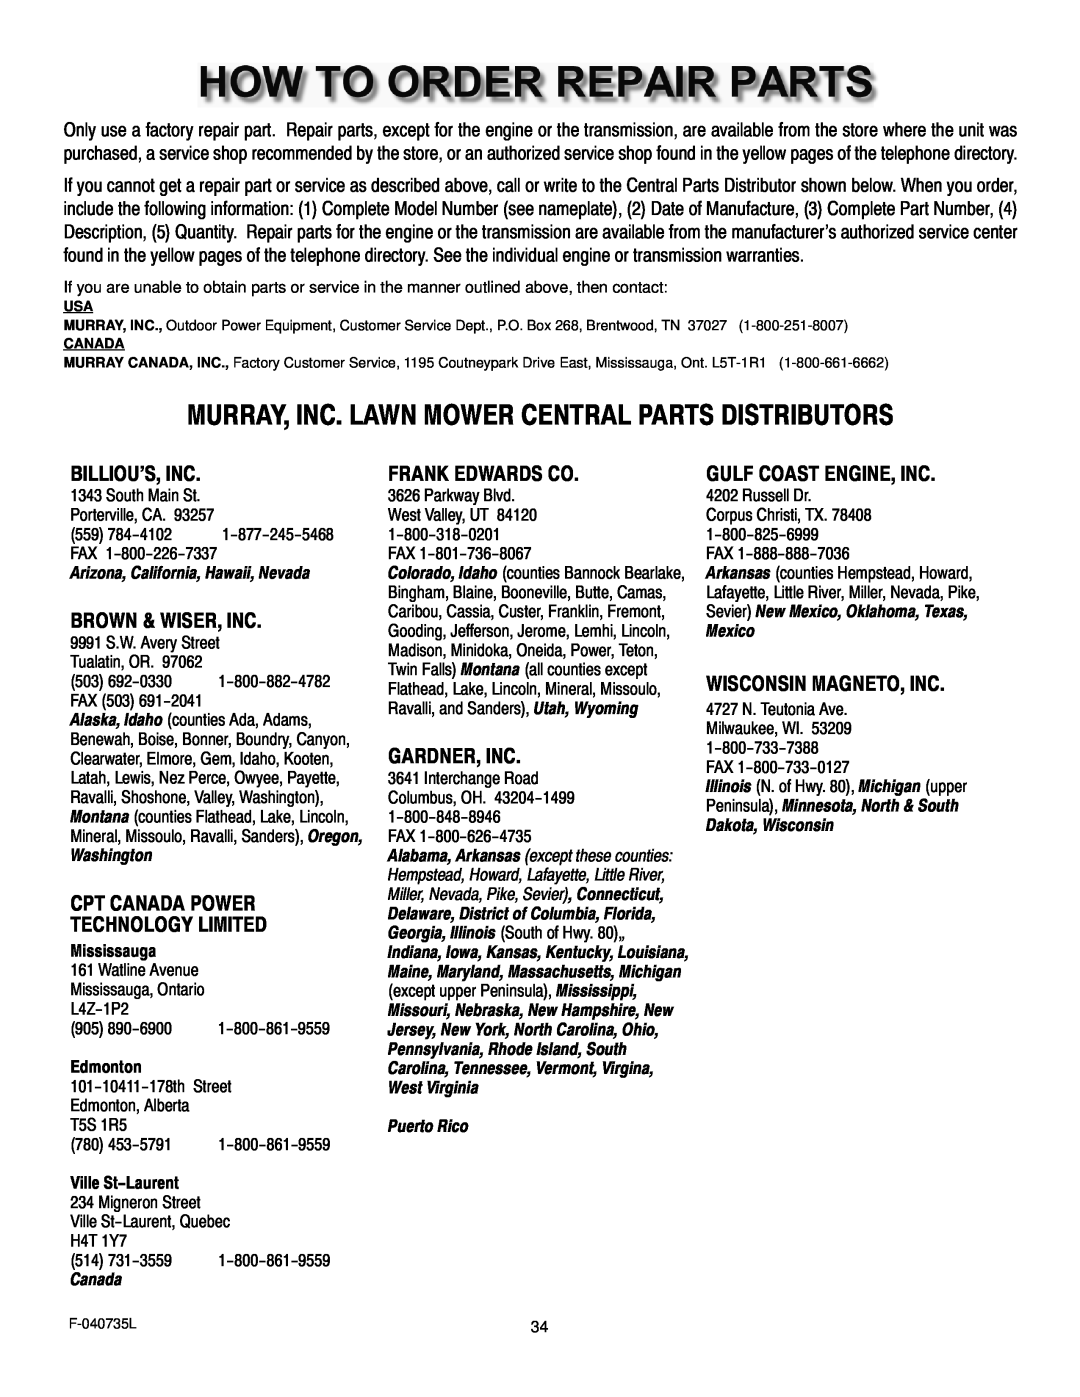 Murray 405000x8C Murray, Inc. Lawn Mower Central Parts Distributors, Billiou’S, Inc, Brown & Wiser, Inc, Frank Edwards Co 